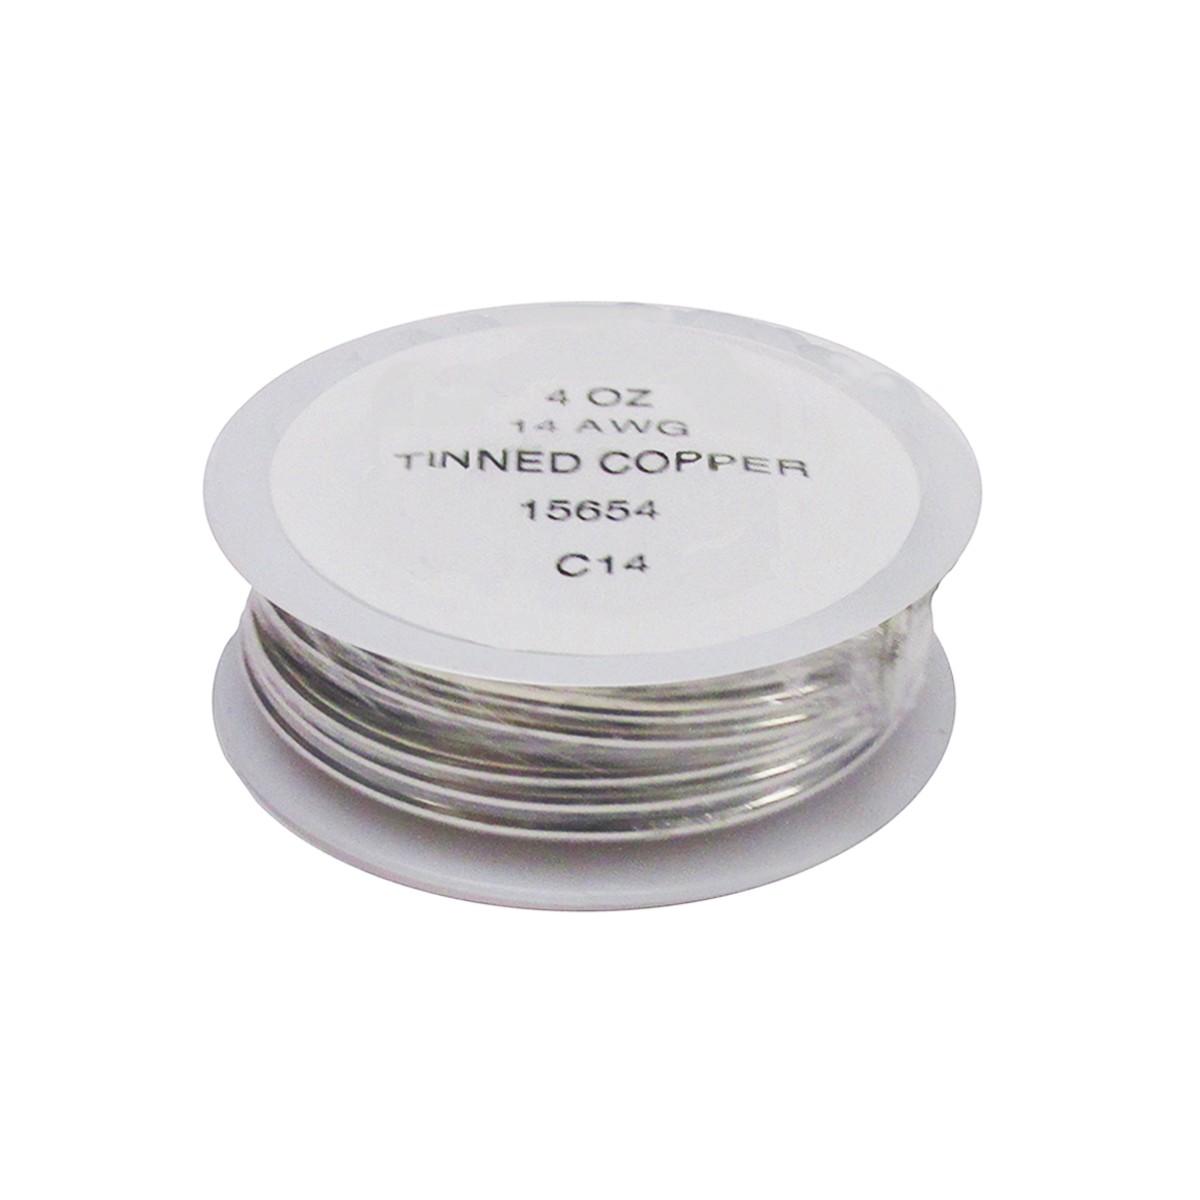 15654-Tinned Copper Wire 14 Gauge 4 oz.